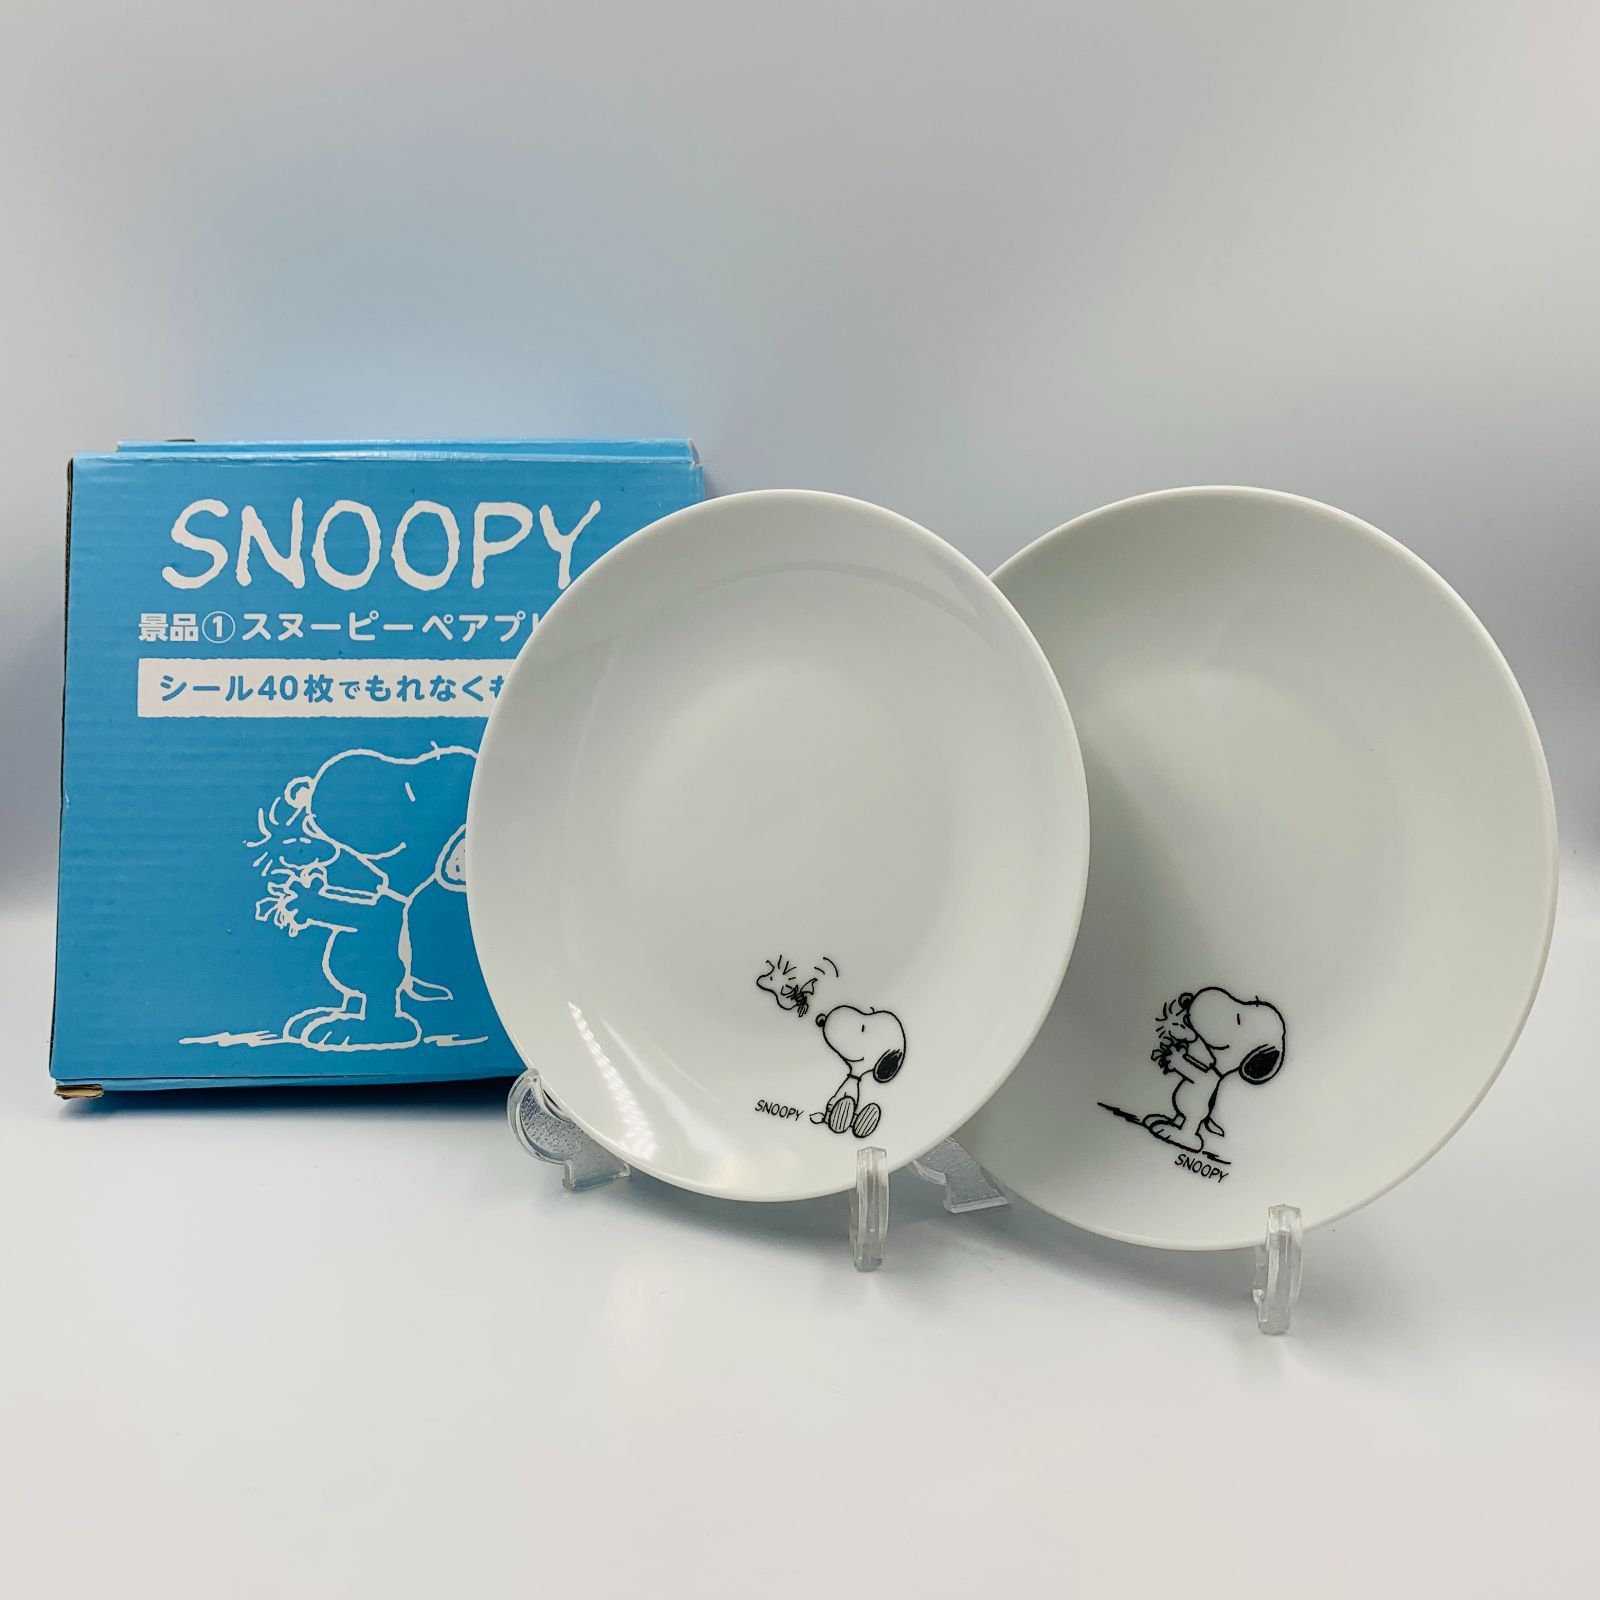 SNOOPYプレート2枚セット - キッチン/食器